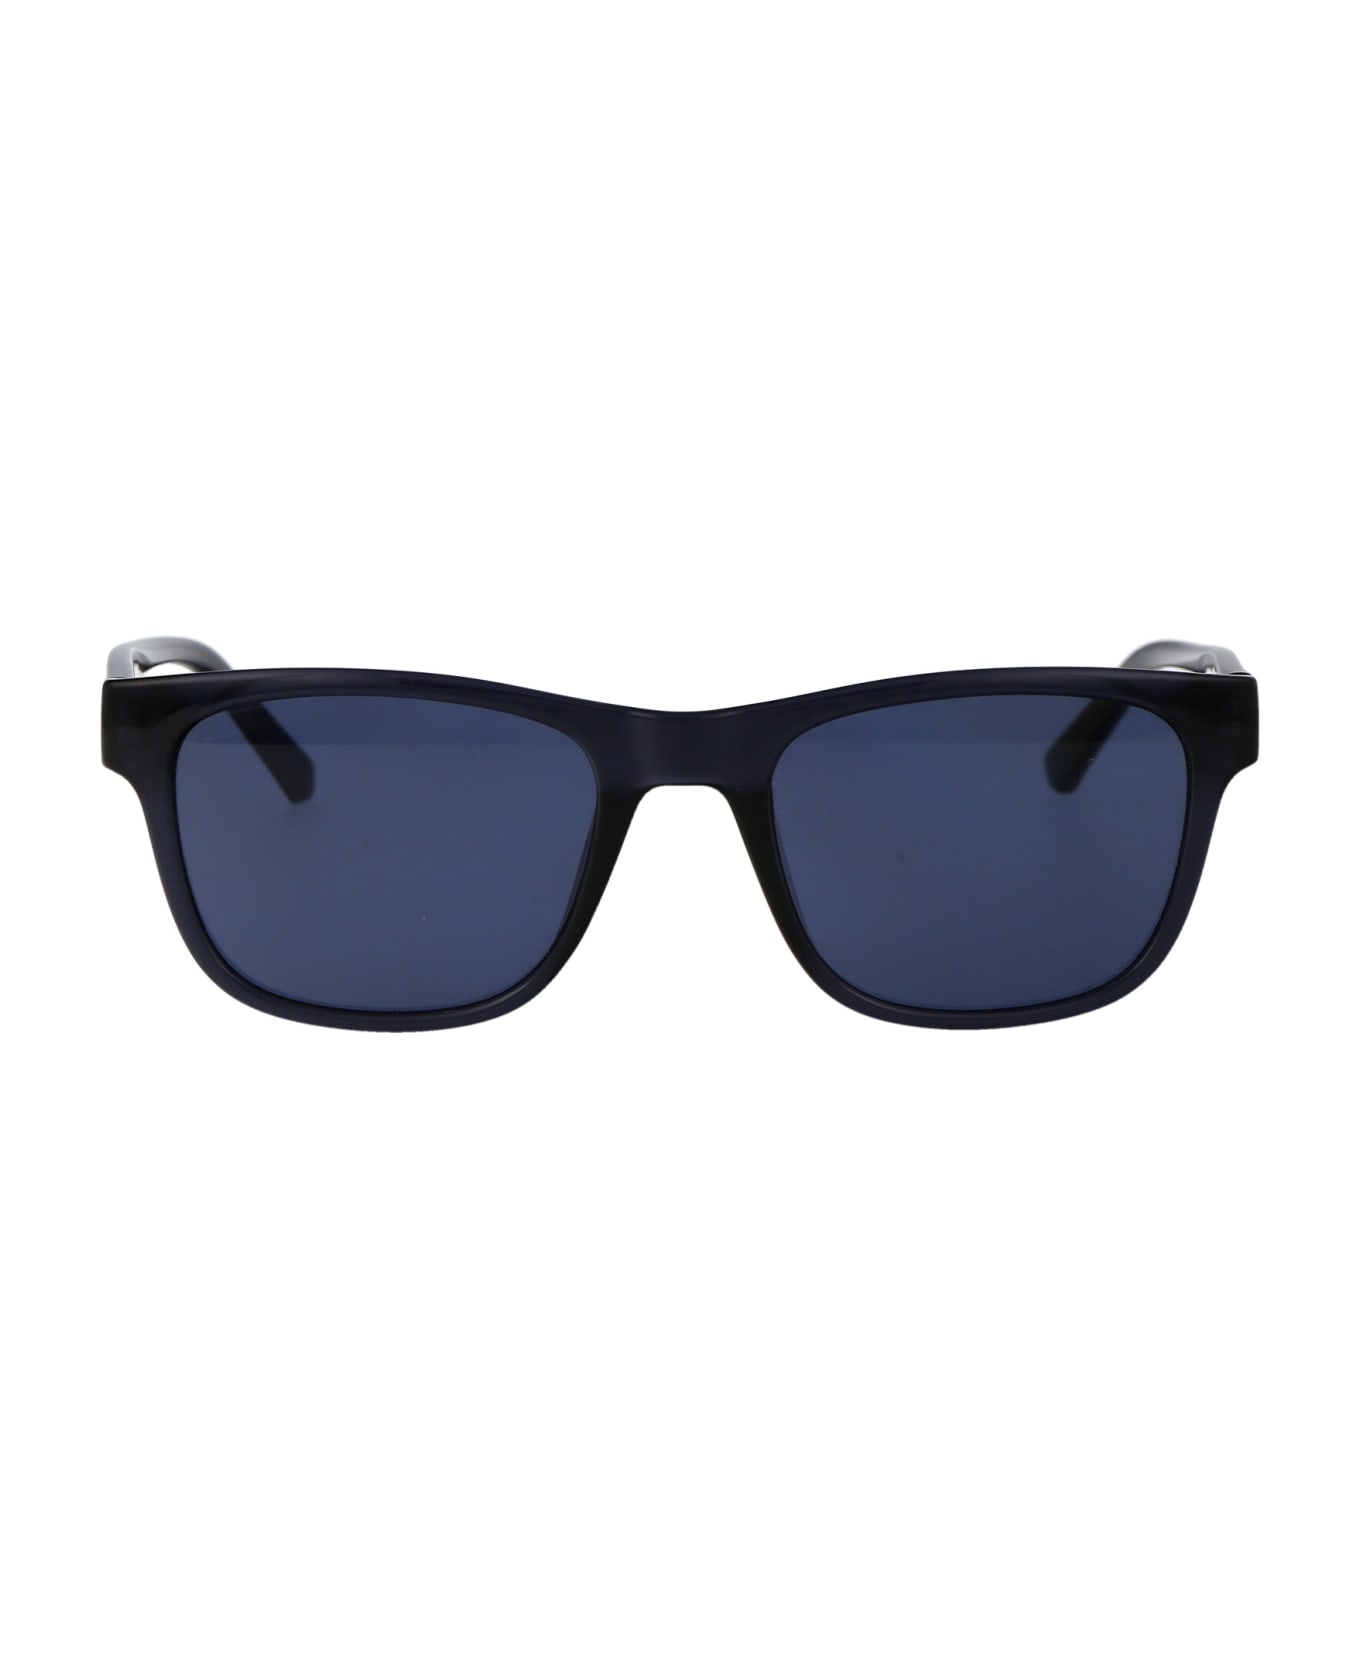 Calvin Klein Jeans Ck20632s Sunglasses - 405 BLACK BLUE サングラス